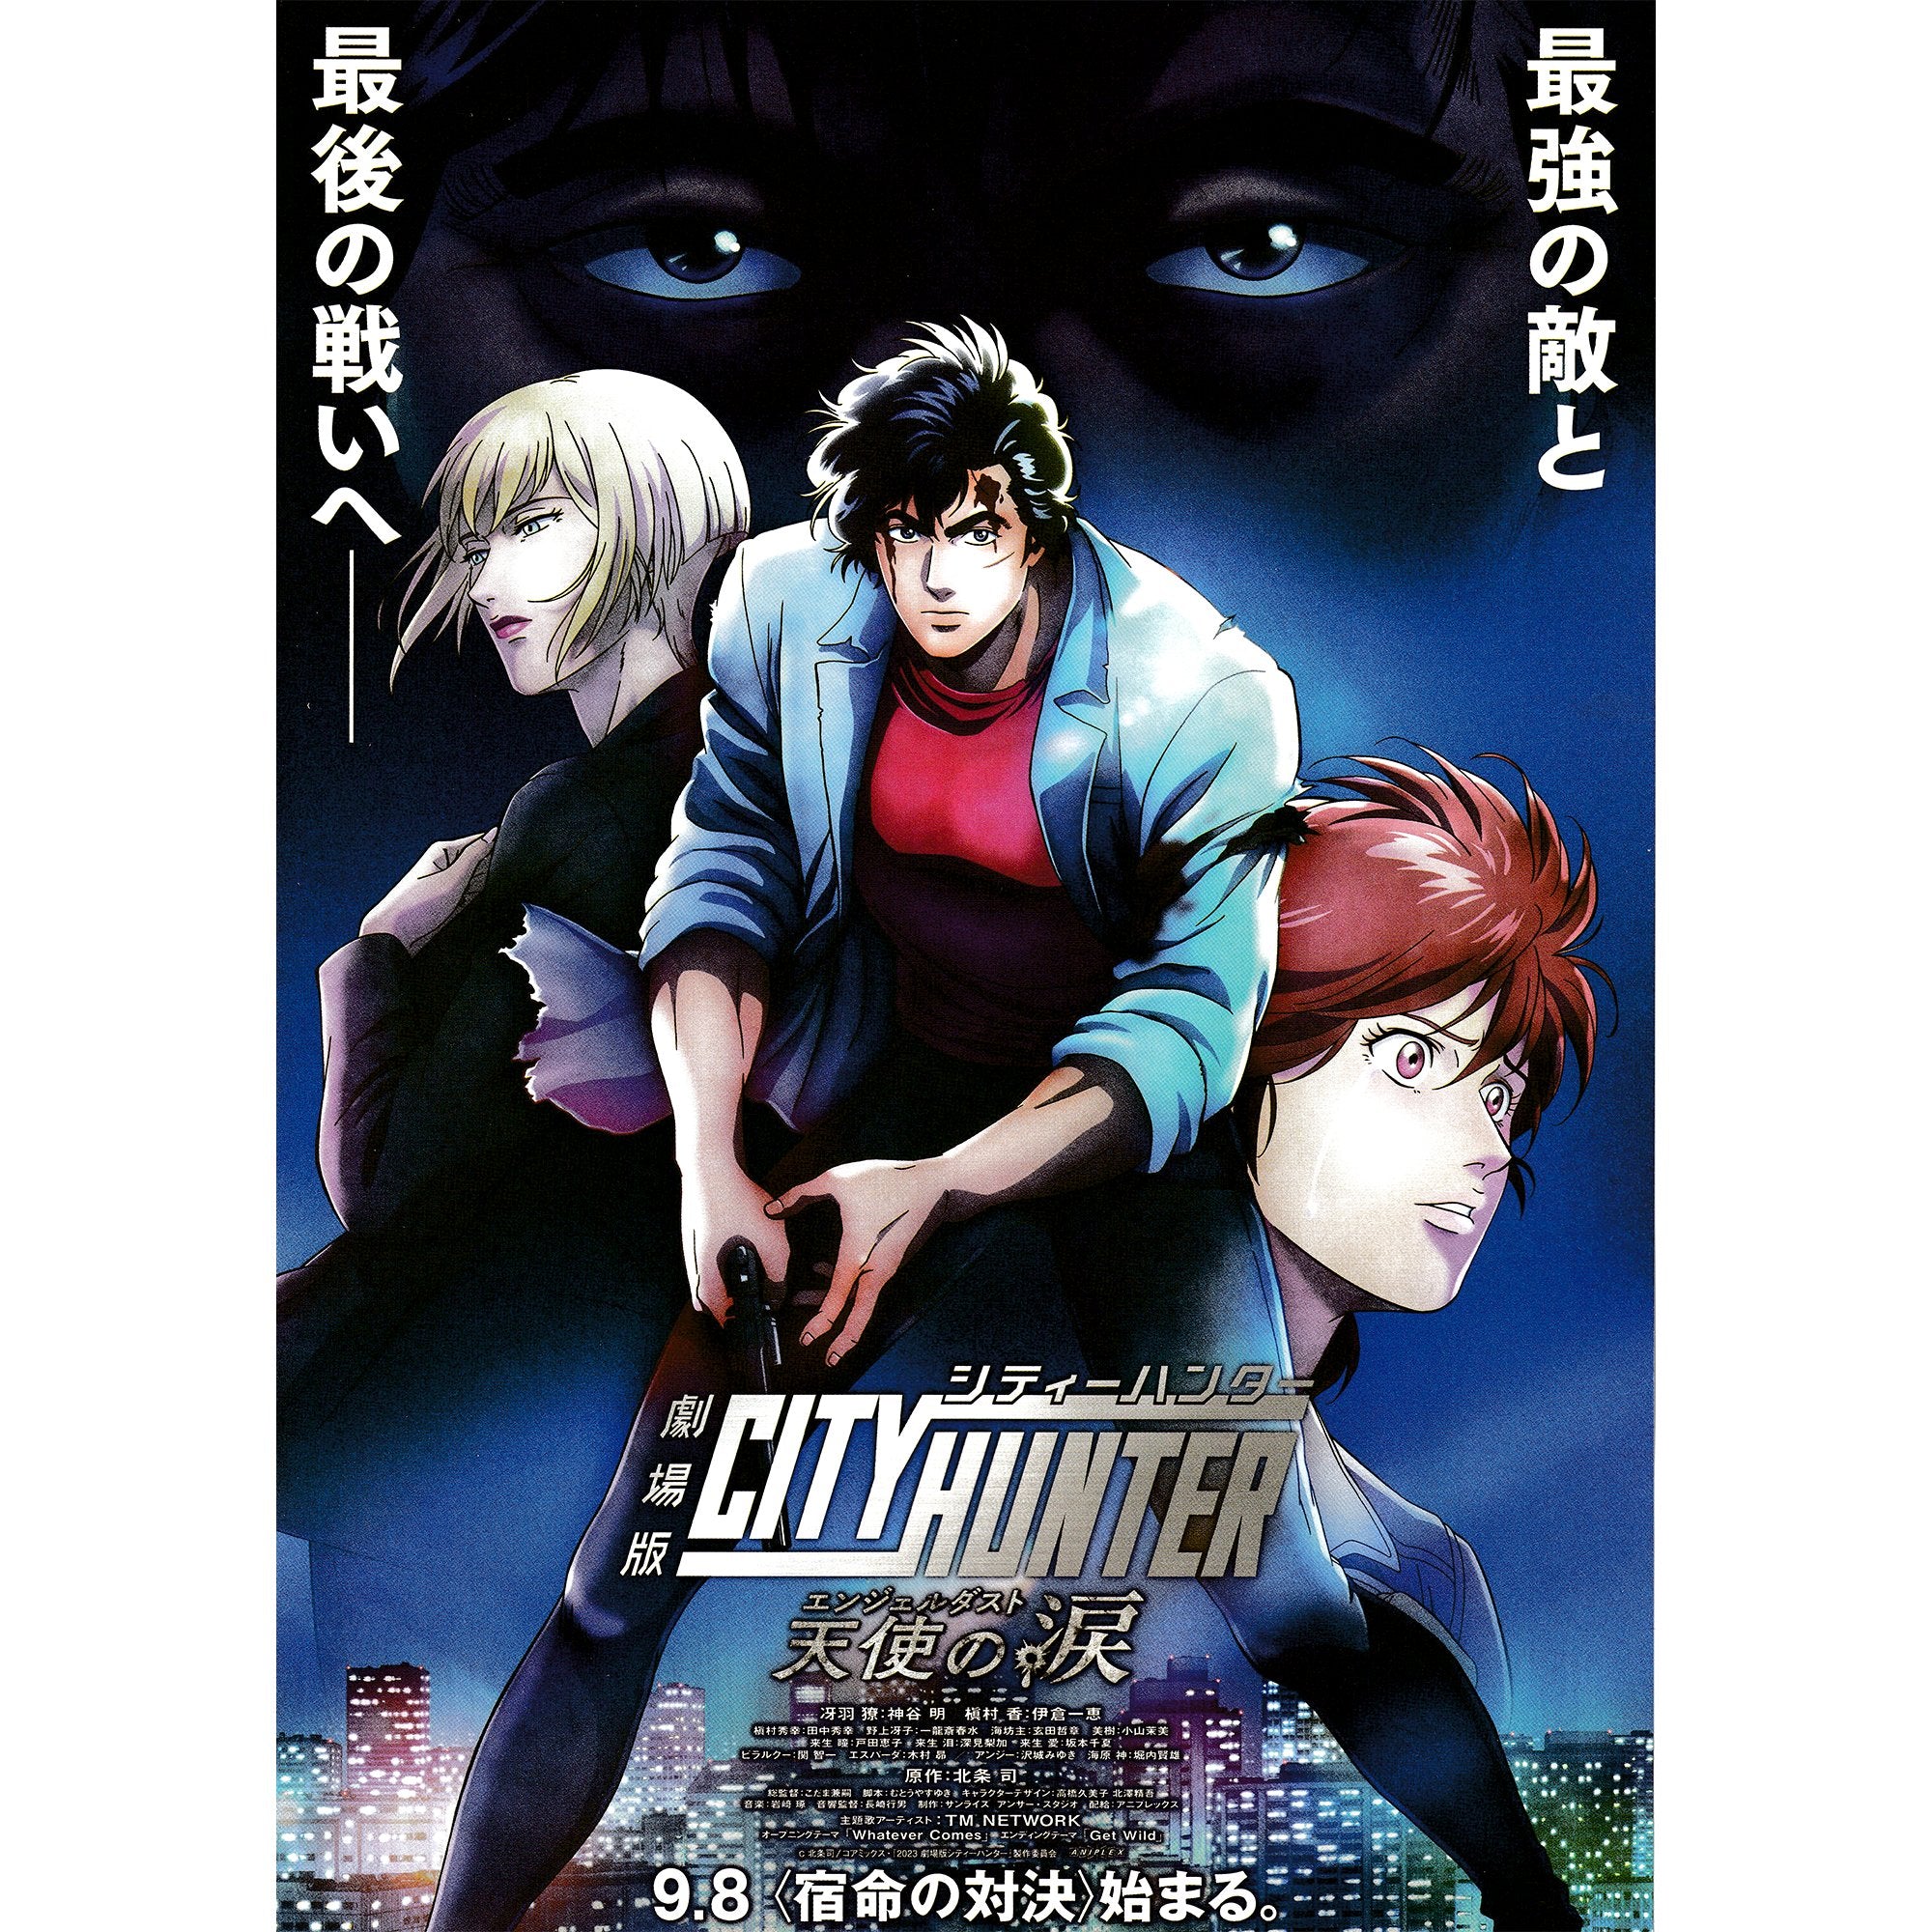 [From Japan] Set of 2!! Anime Manga Mini Movie Chirashi / Poster / Flyer lot